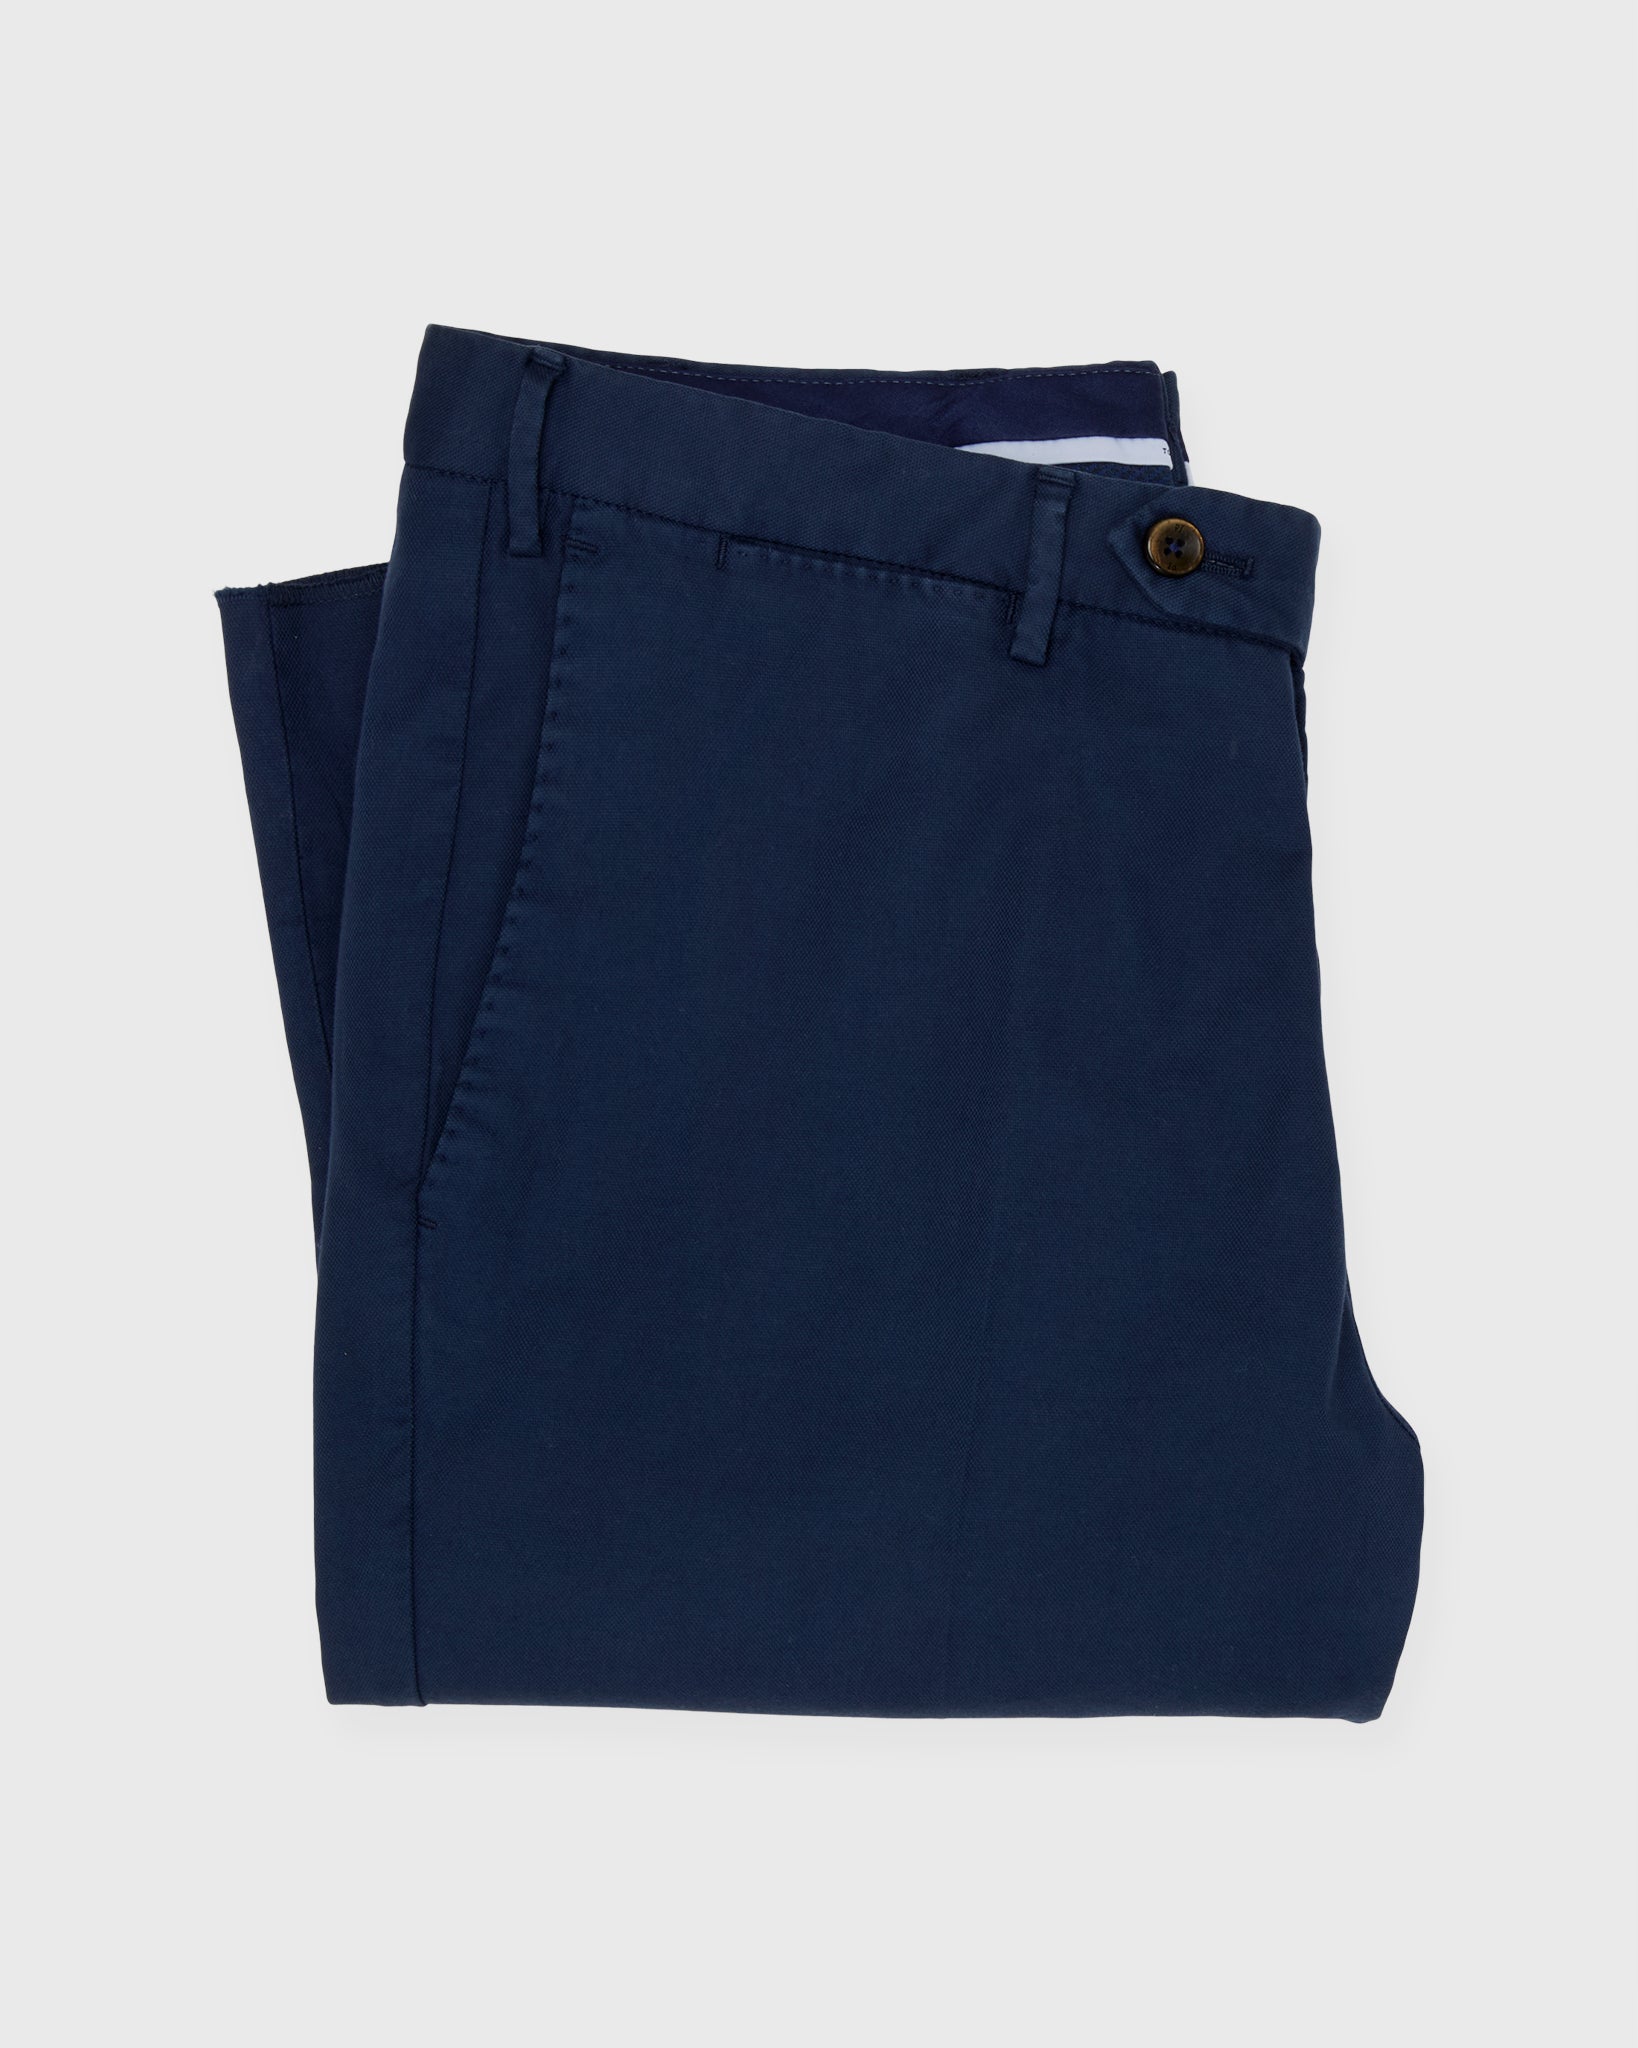 Sport Trouser in Deep Blue Stretch Canvas